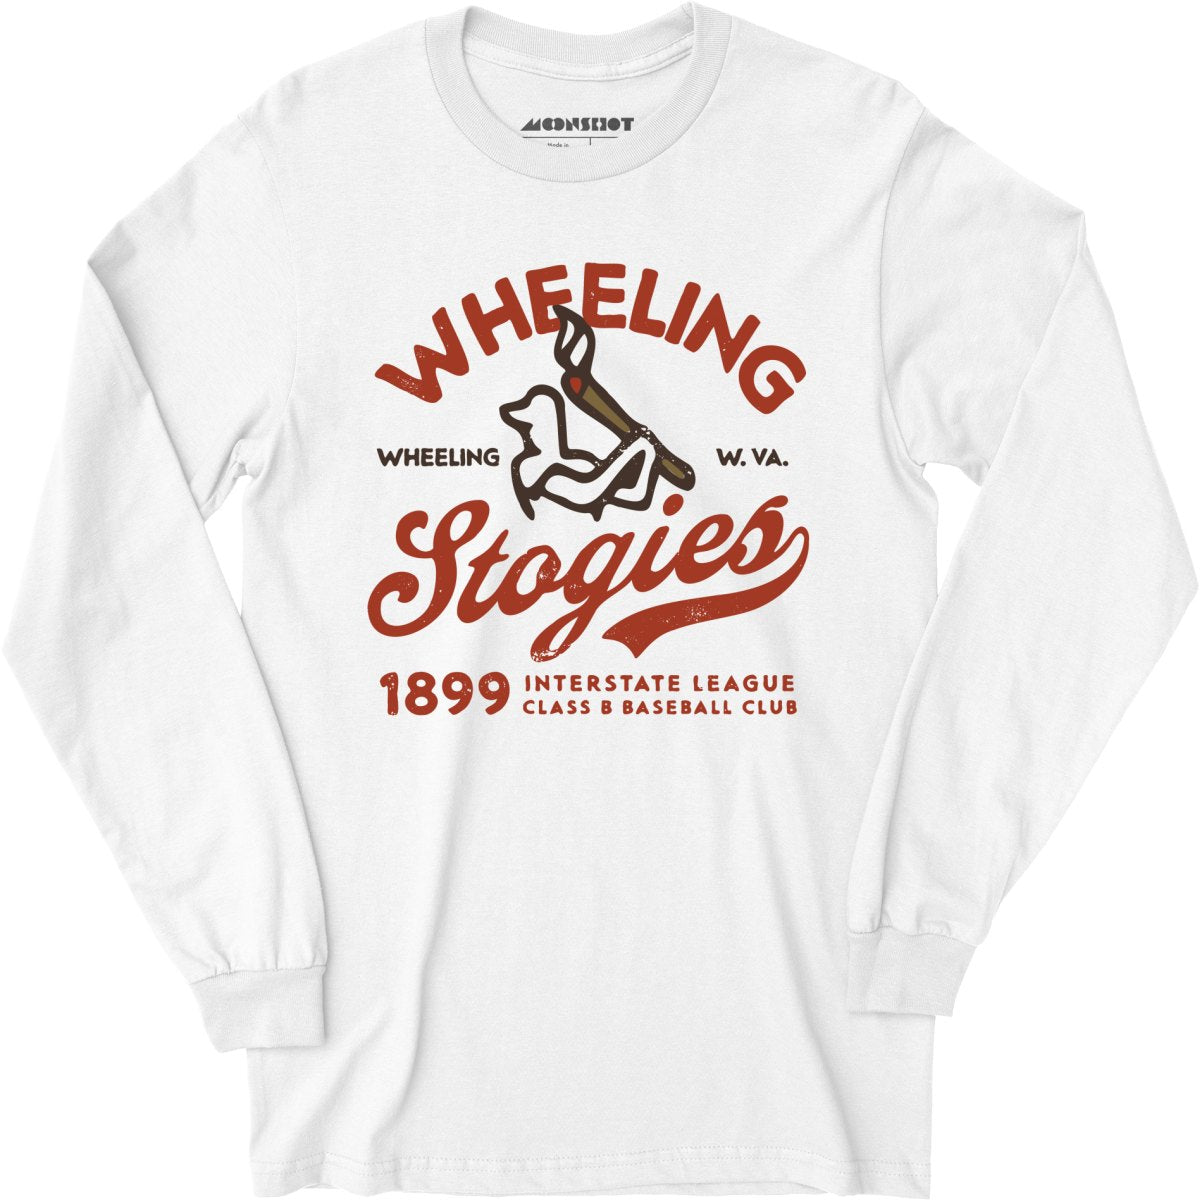 Wheeling Stogies - West Virginia - Vintage Defunct Baseball Teams - Long Sleeve T-Shirt